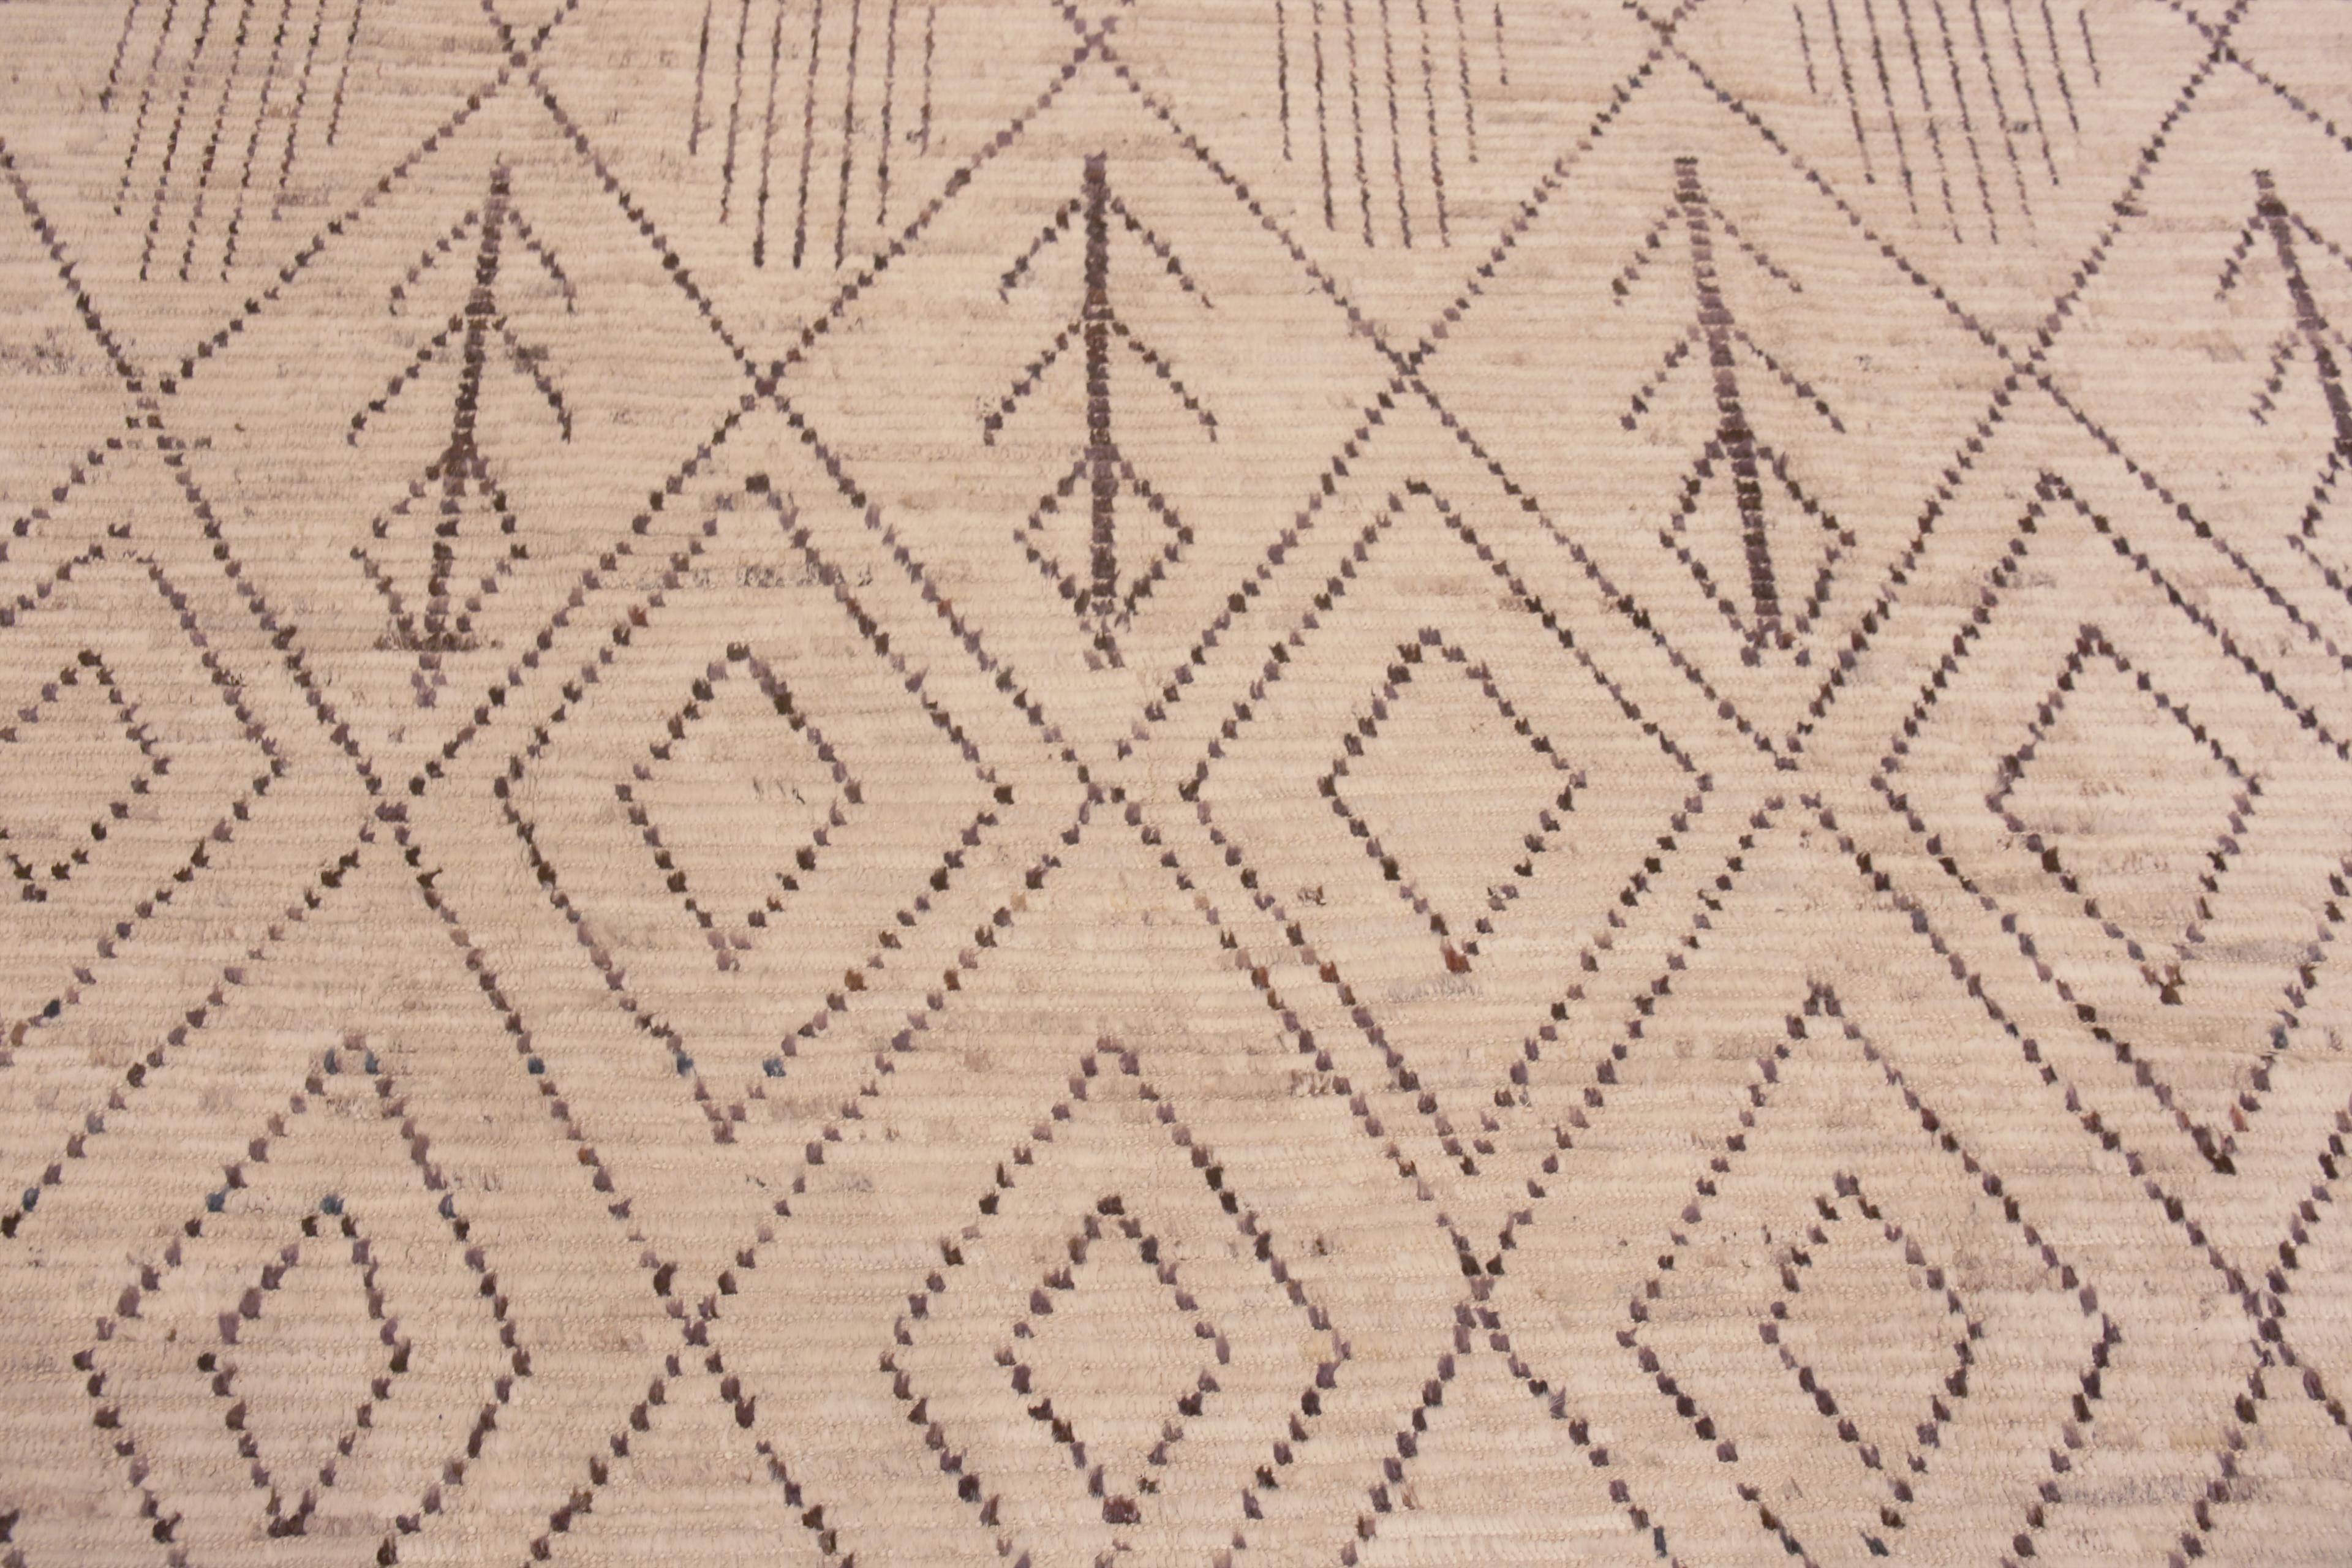 Wool Nazmiyal Collection Modern Tribal Moroccan Beni Ourain Design Rug 9'3